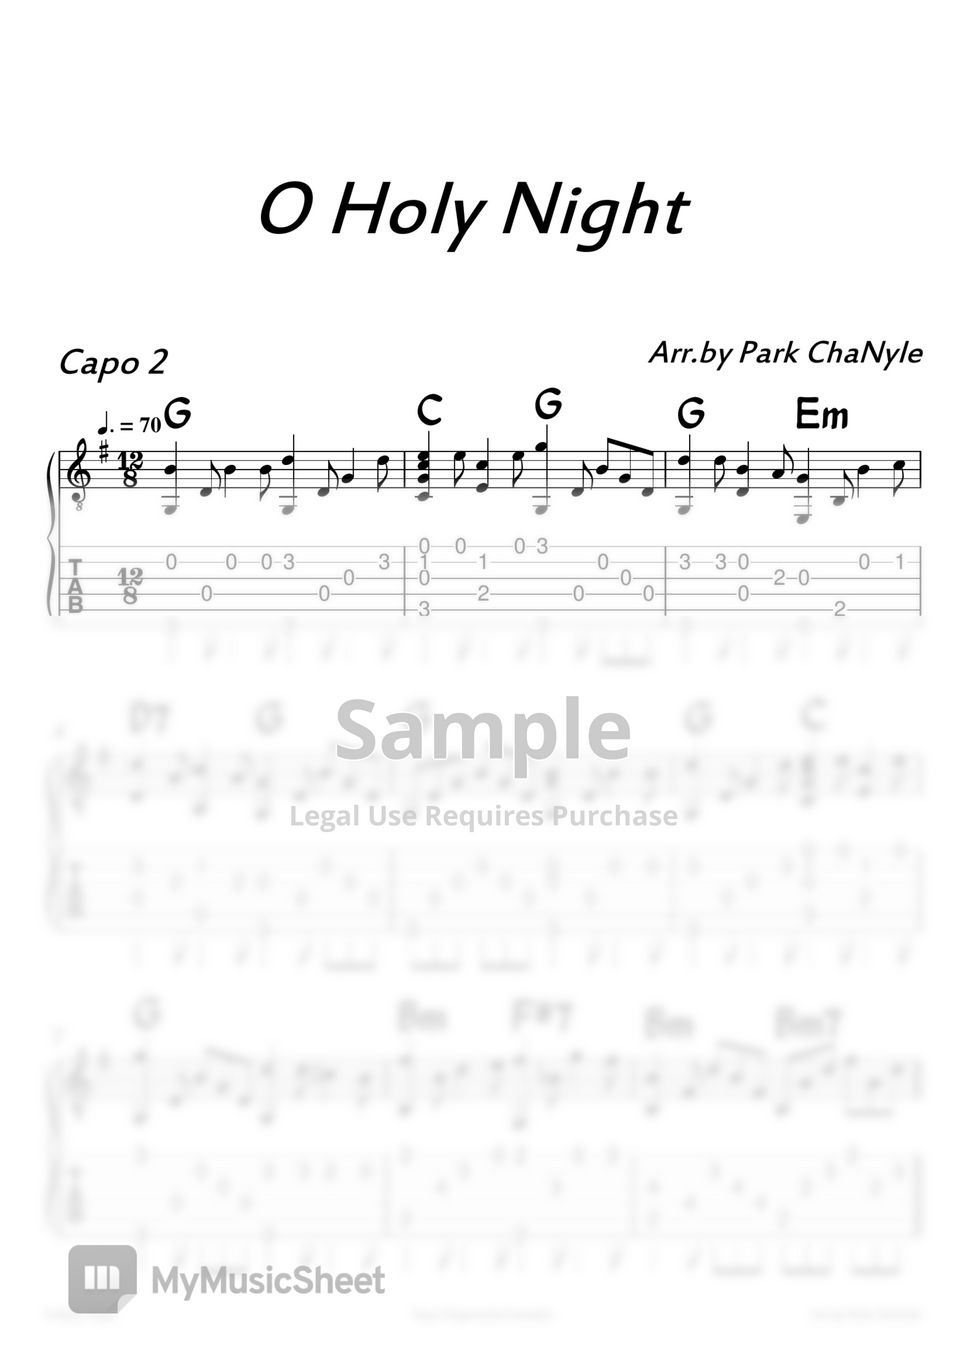 guitar chords for o holy night